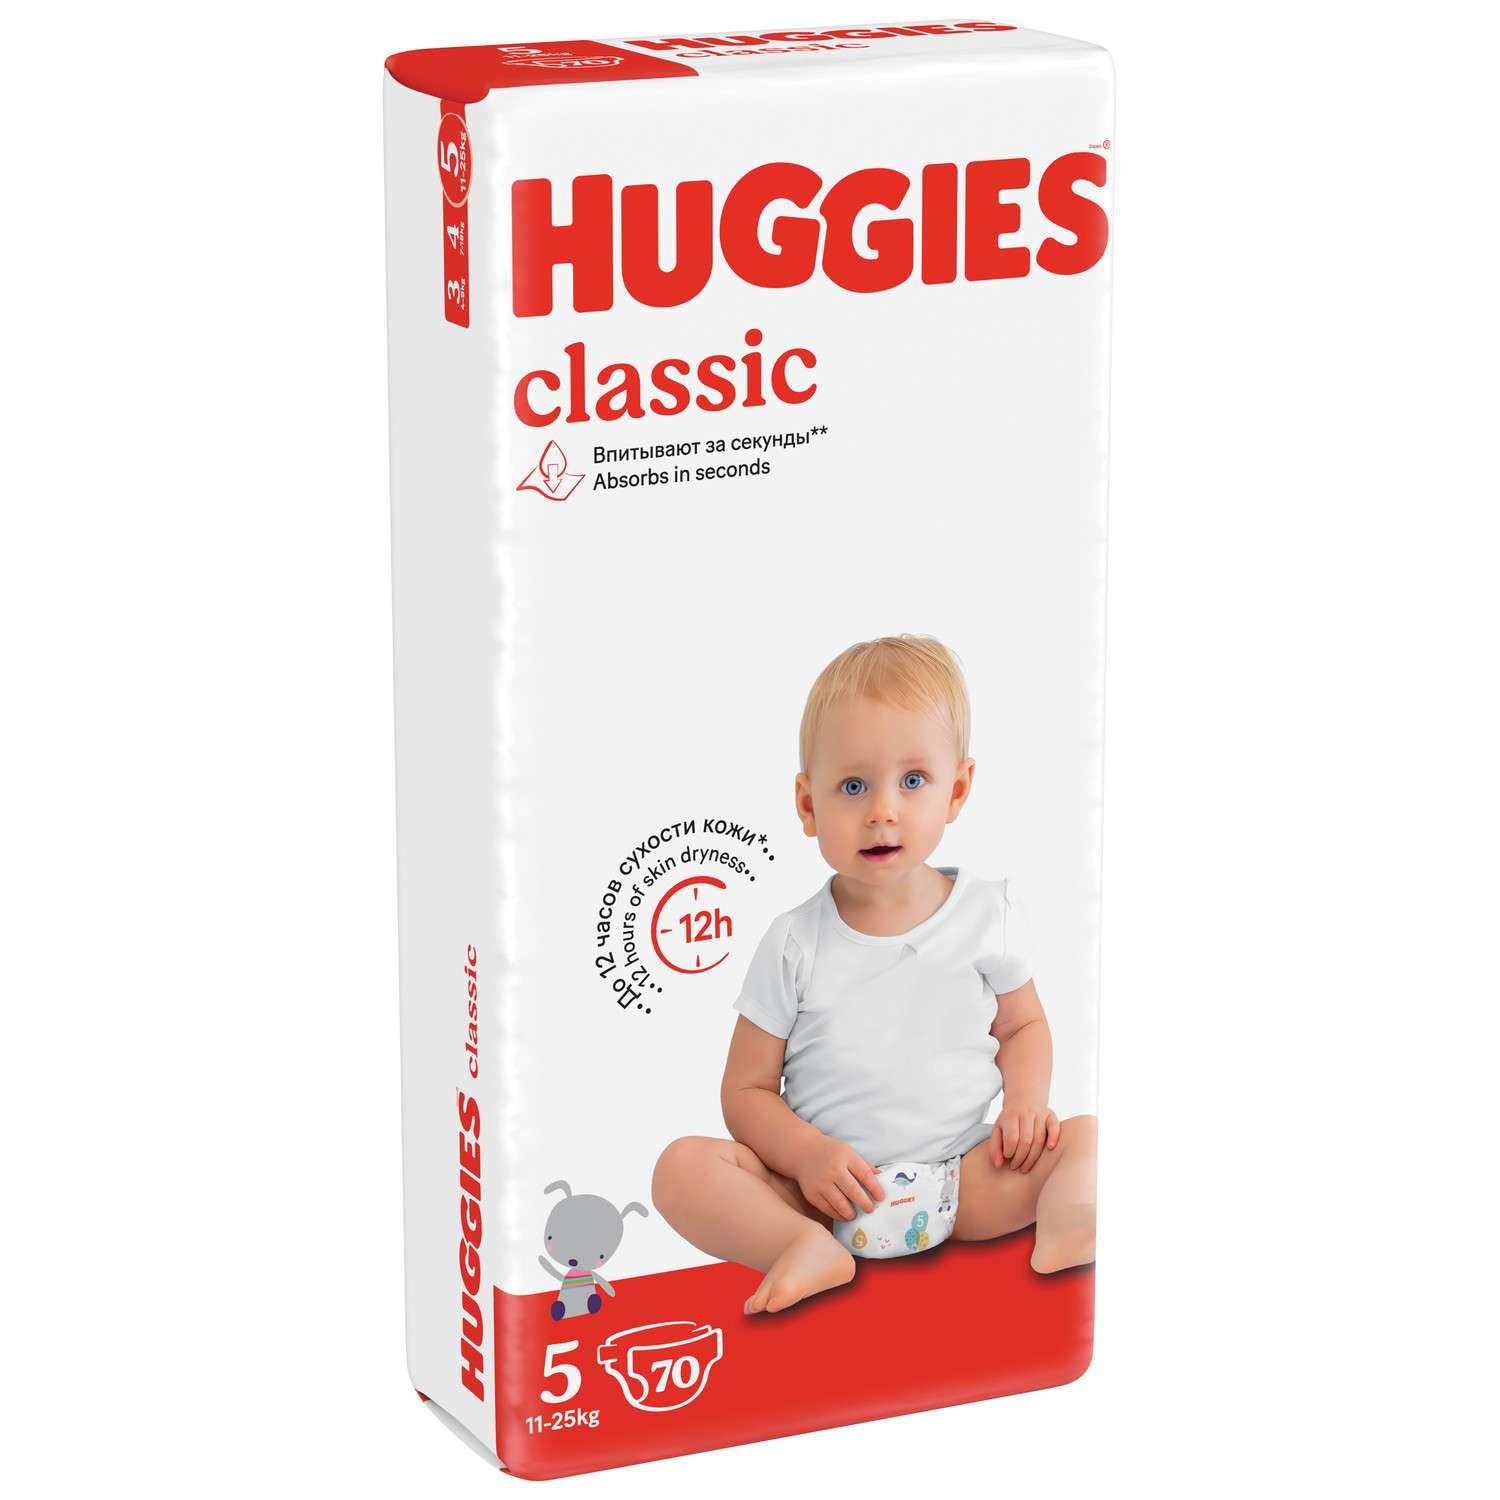 Подгузники Huggies Classic 5 11-25кг 70шт - фото 2